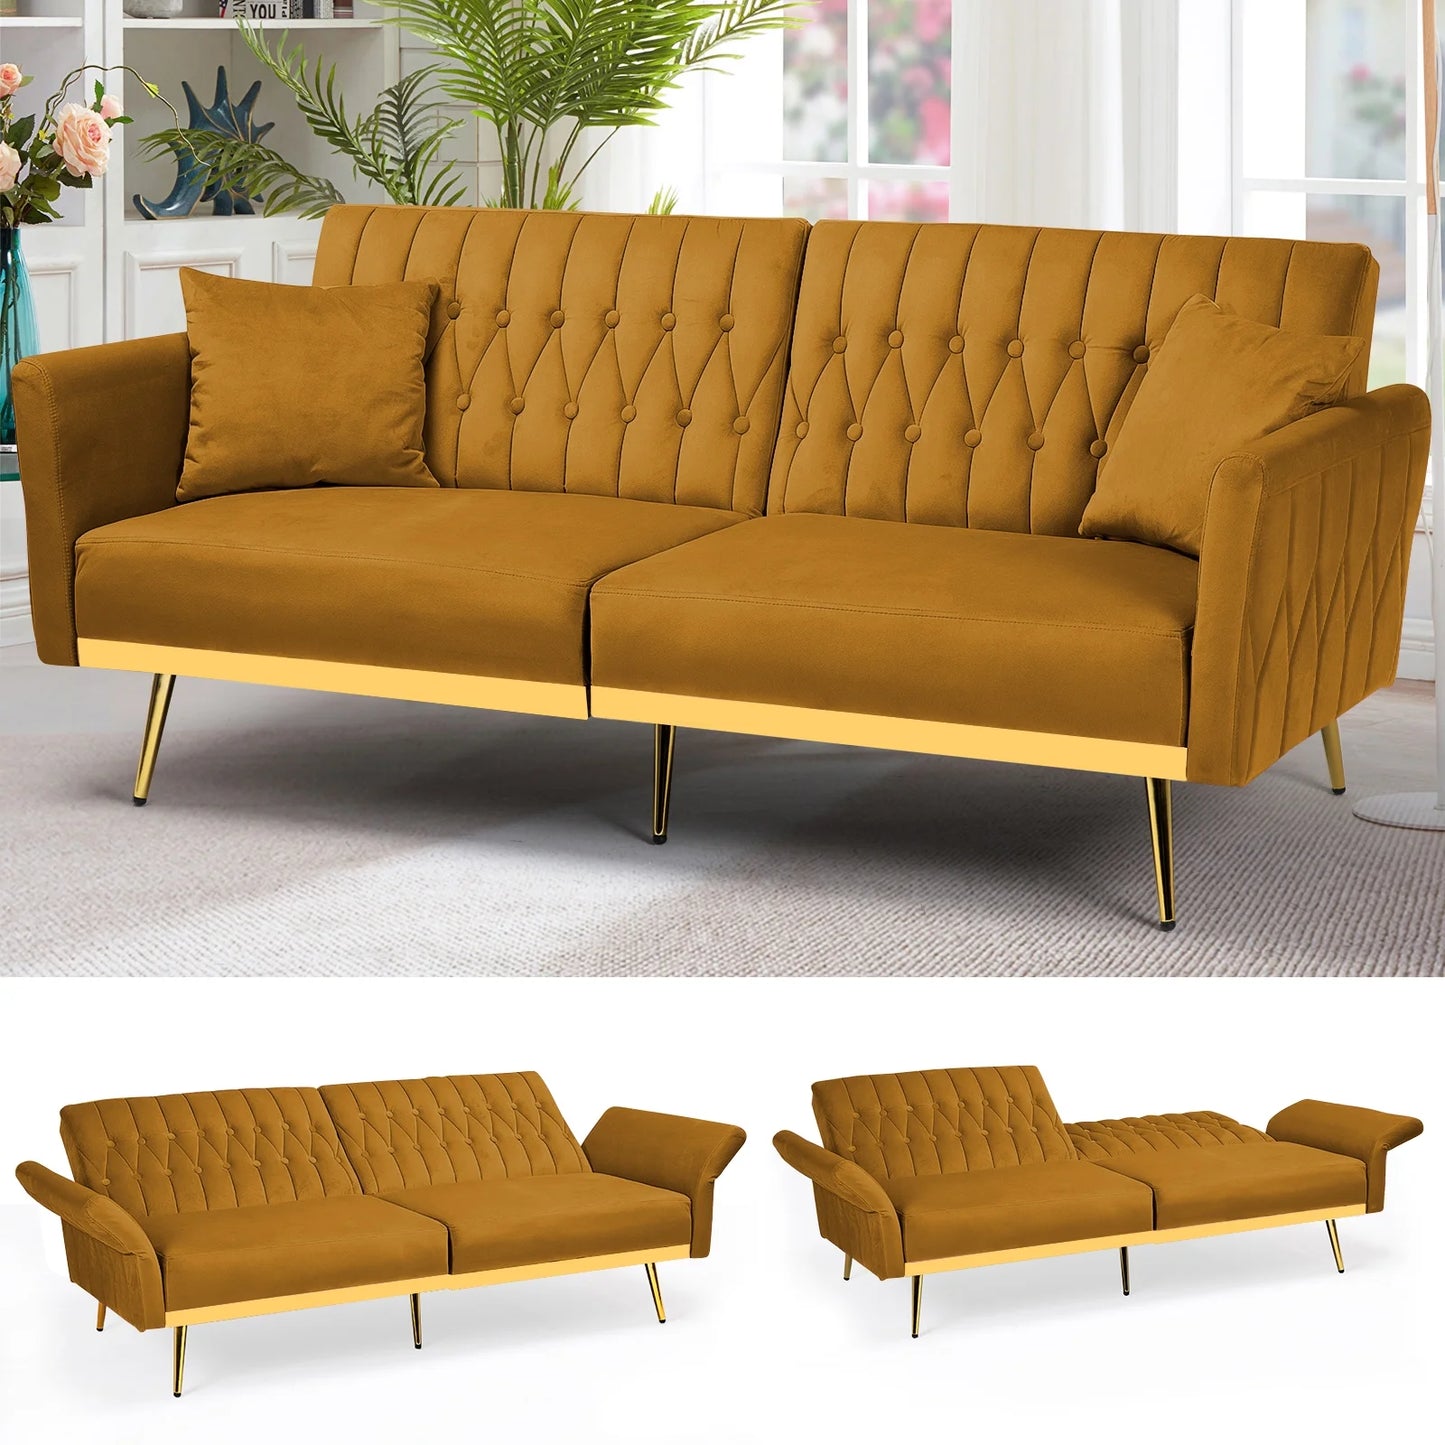 ACMEASE 70â?Velvet Futon Sofa Bed with Adjustable Armrests and 2 Pillows, Convertible Futon Couch, Ginger